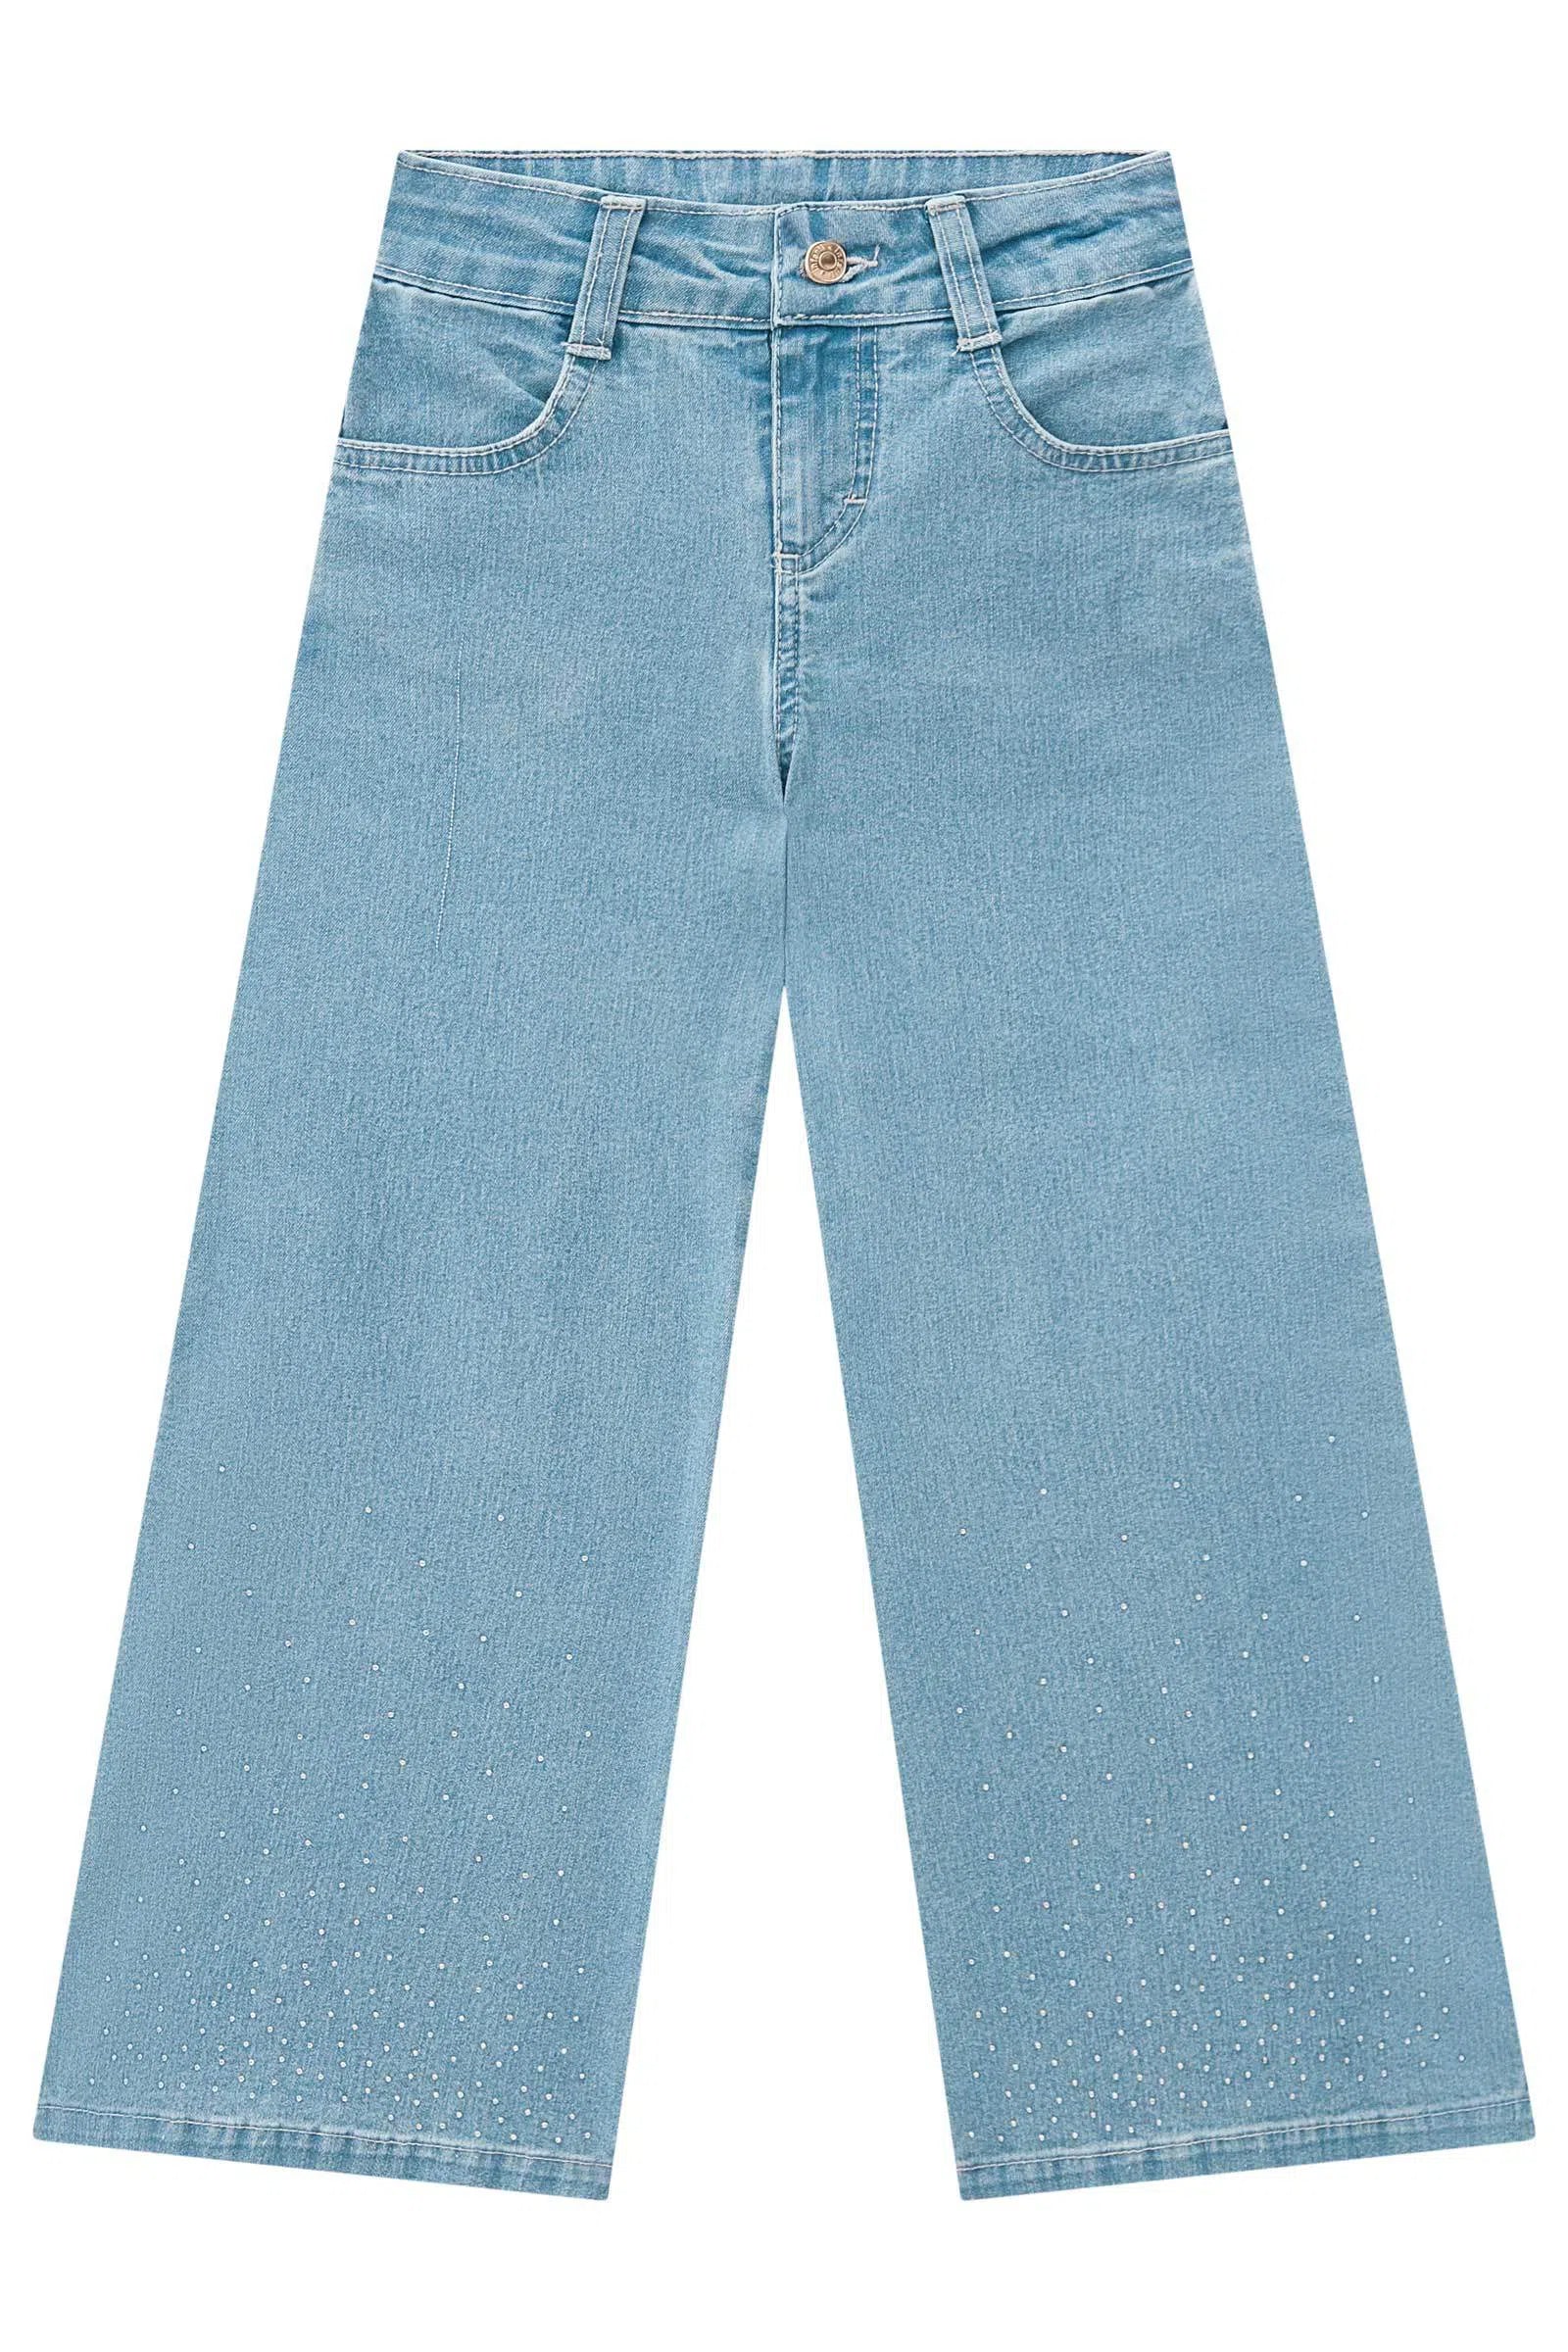 Calça Wide Leg em Jeans Bellini com Elastano 72303 Infanti